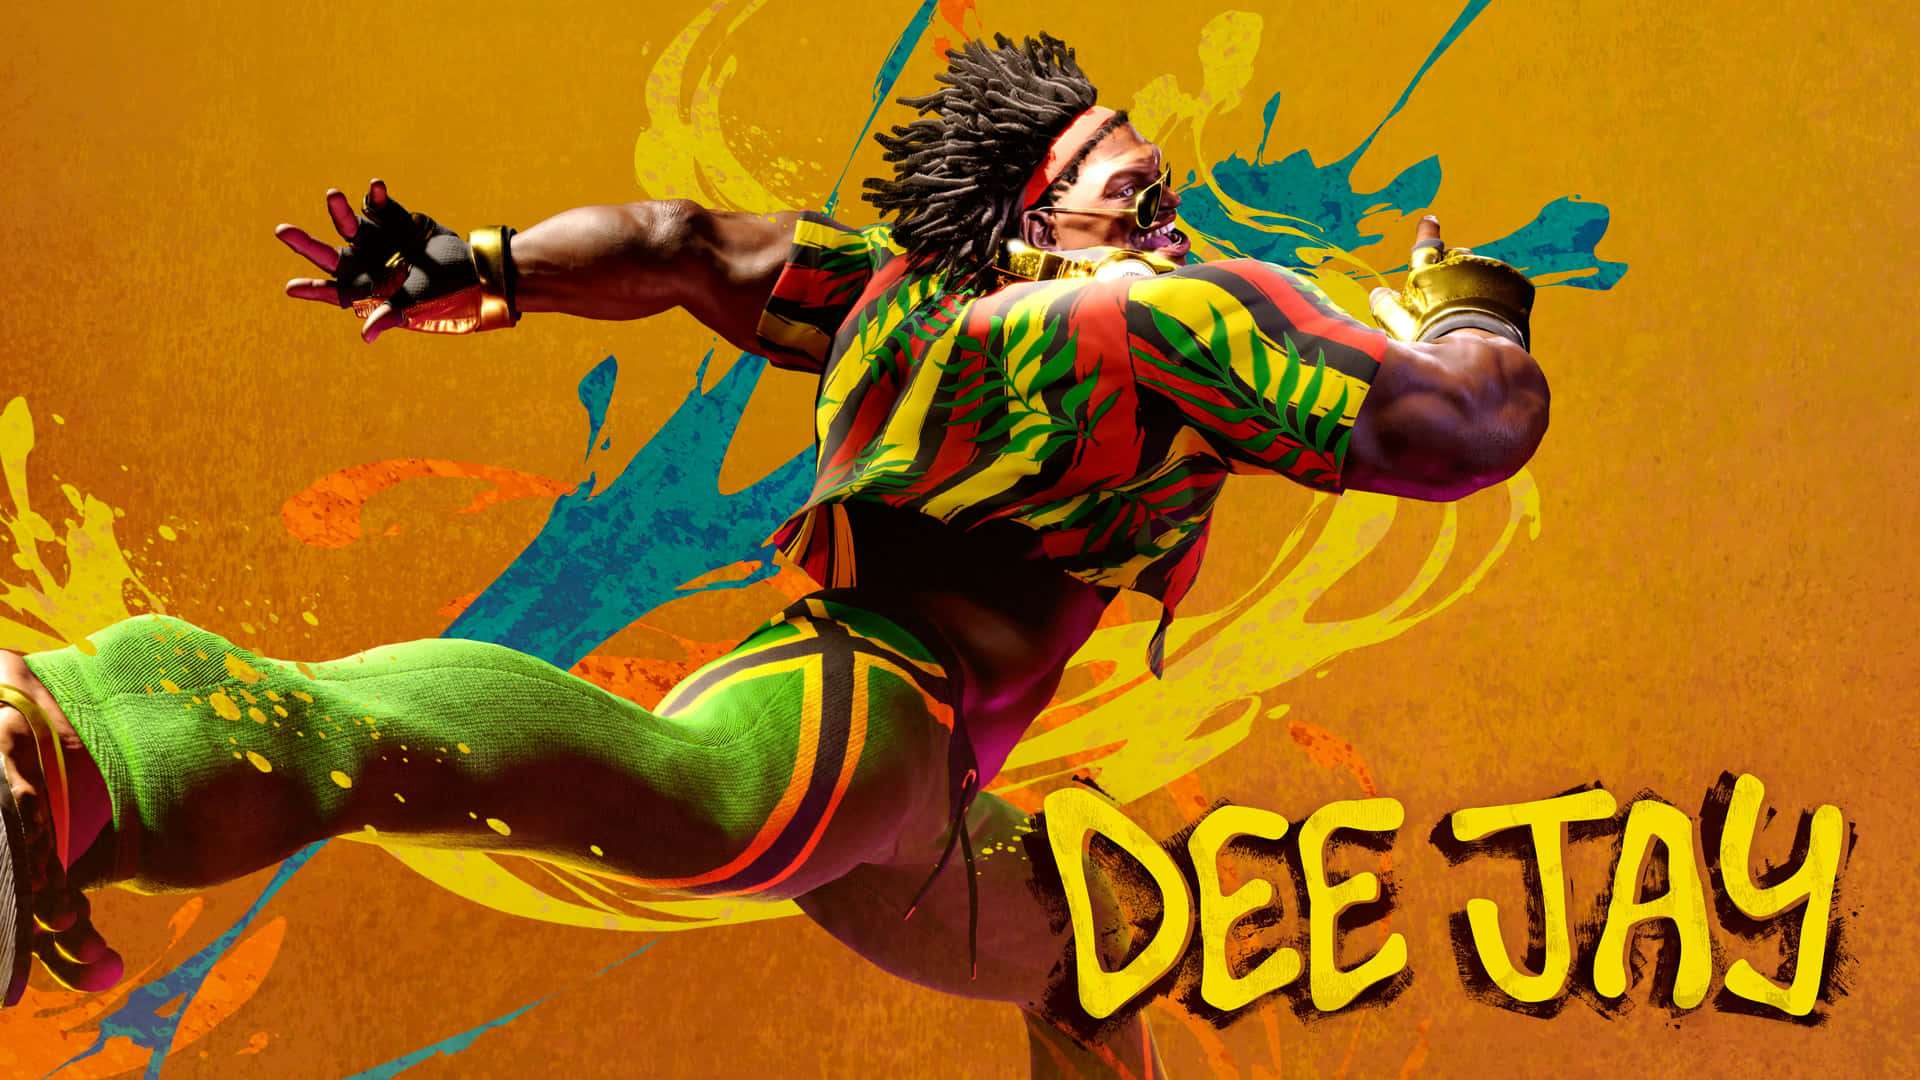 Street Fighter6 Dee Jay Kick Wallpaper